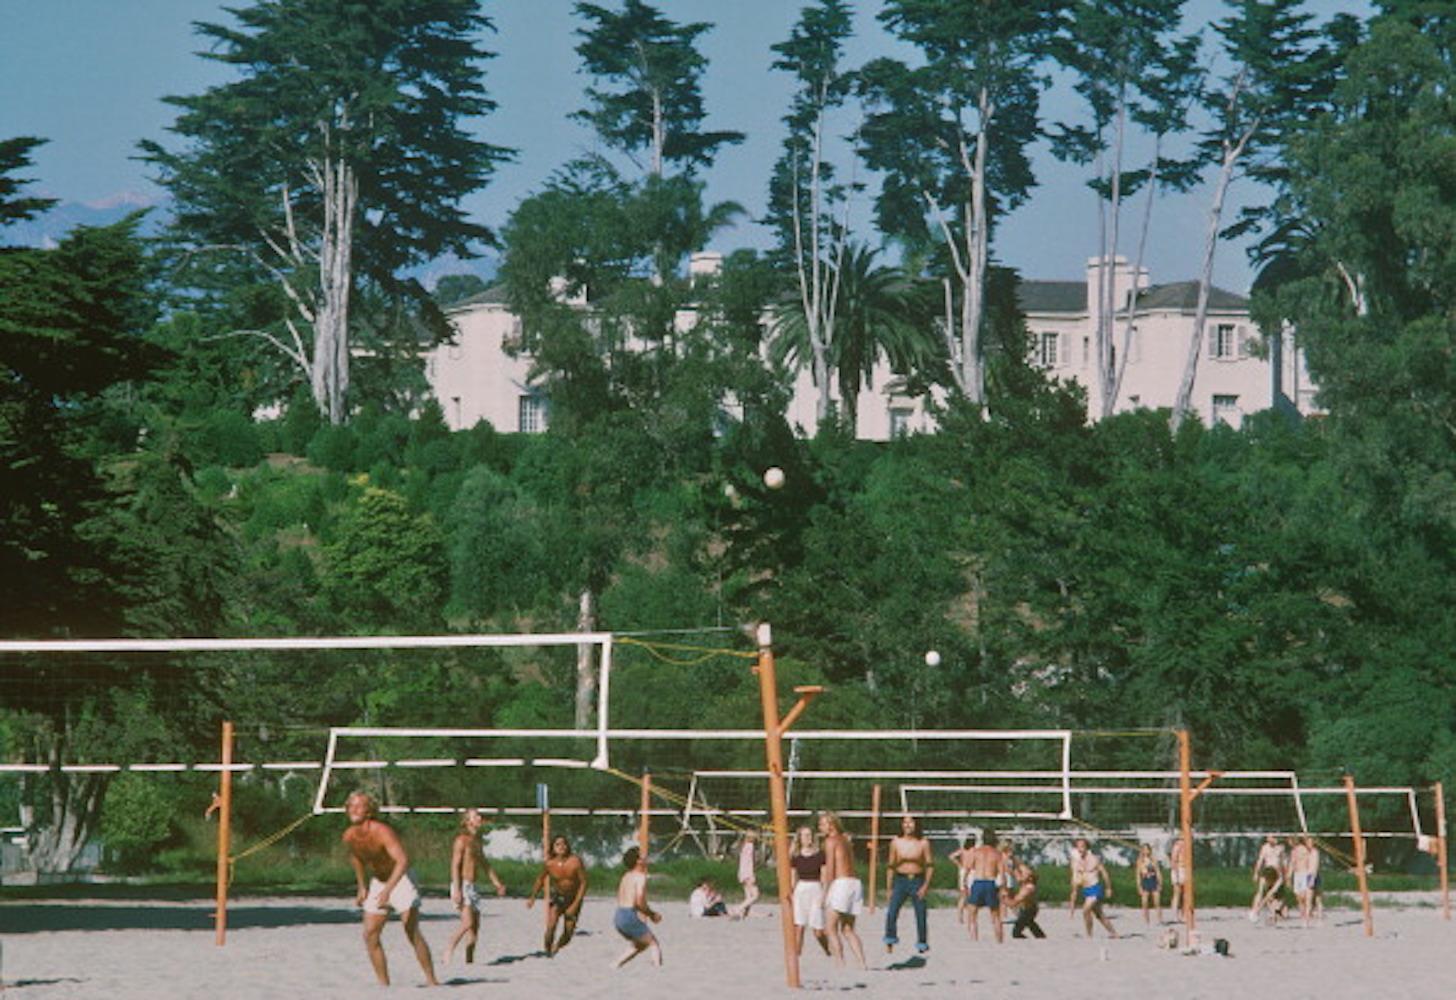 Volleyball in Santa Barbara, 1975 by Slim Aarons